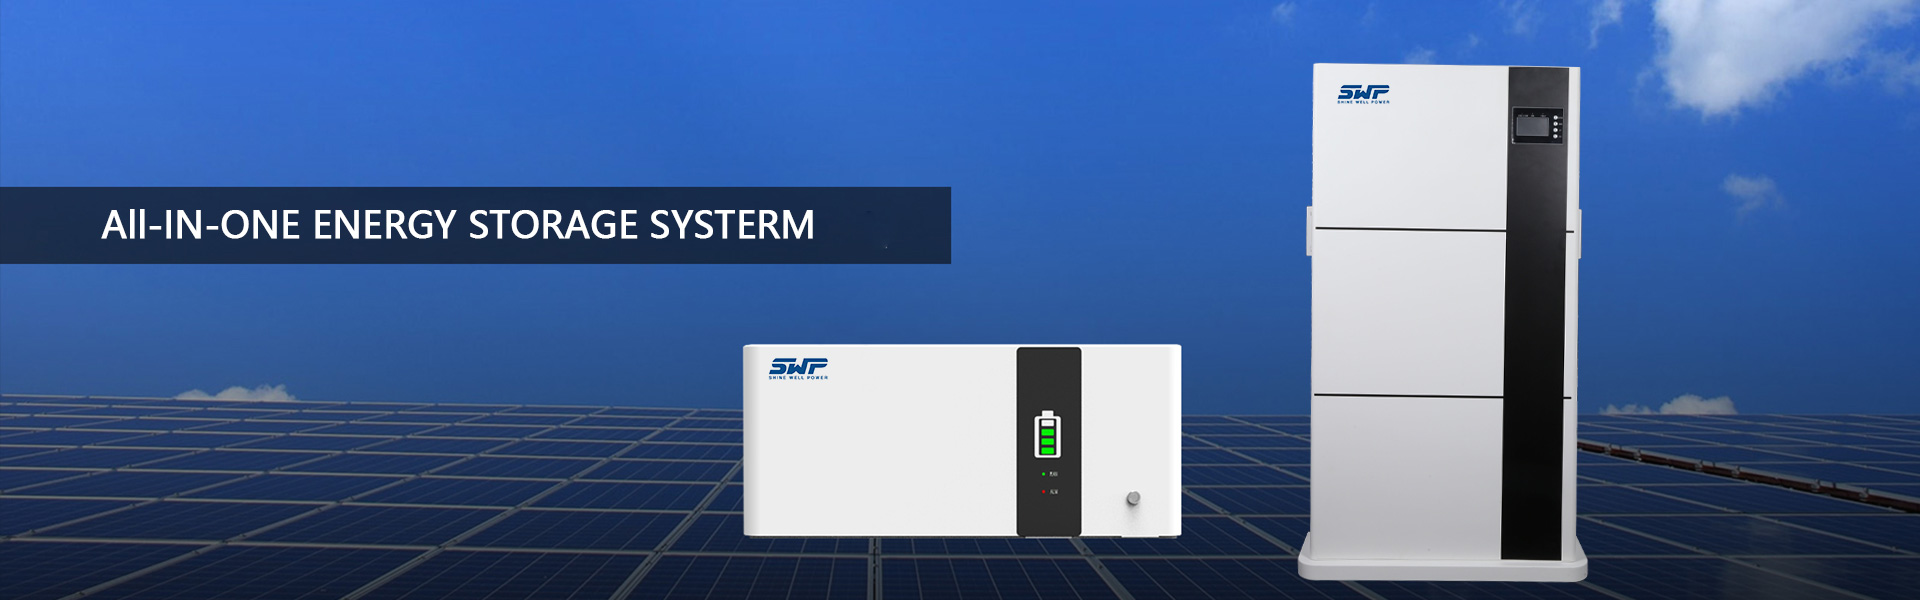 Батарея системы хранения энергии, коммерческие системы хранения энергии, настенный аккумулятор,Shenzhen Shine Well Power Technology Co.,Ltd